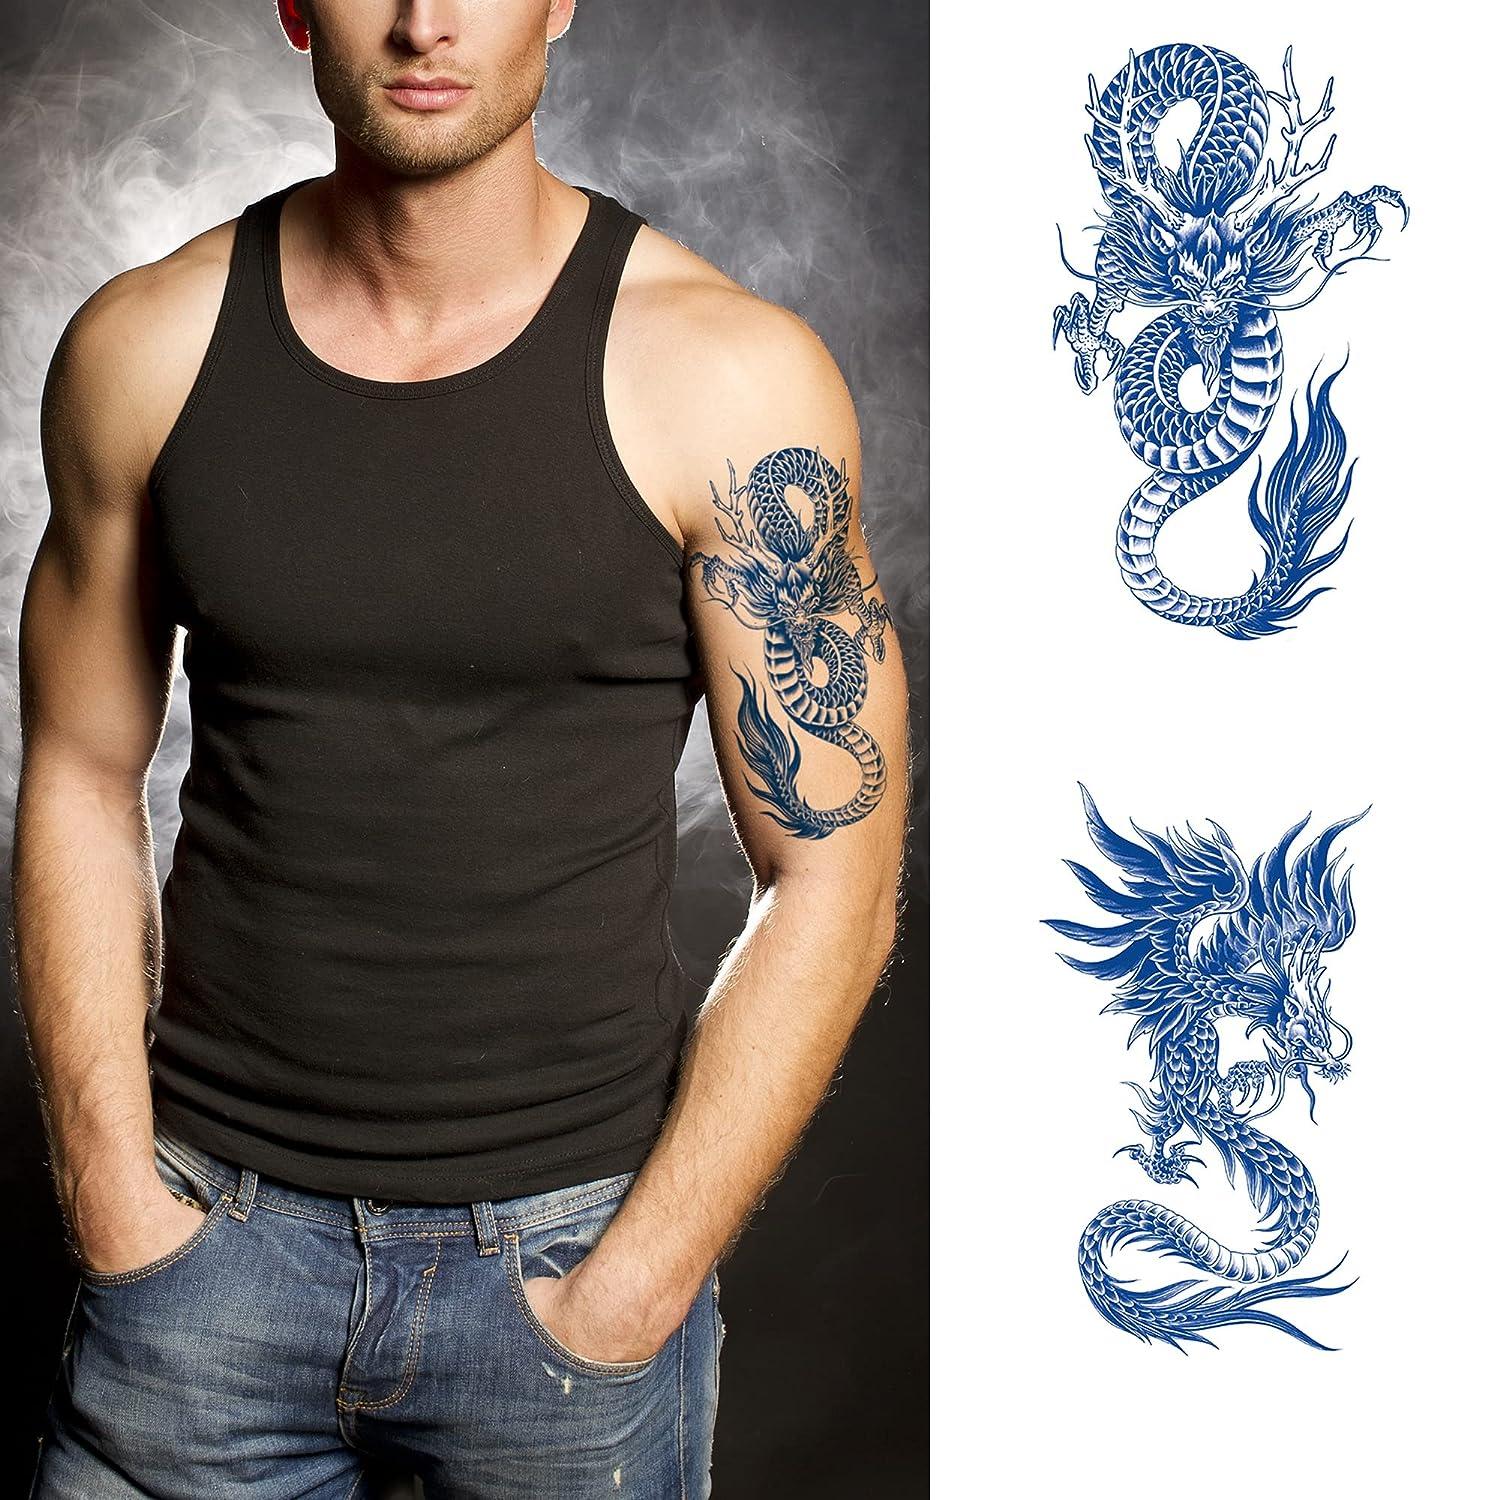 Tattoo uploaded by Tattoodo • Small dragon tattoo by Big Steve #BigSteve  #small #tiny #smalldragontattoo #smalltattoo #tinytattoo #microtattoo  #dragontattoos #dragontattoo #dragon #mythicalcreature #myth #legend #magic  #fable • Tattoodo